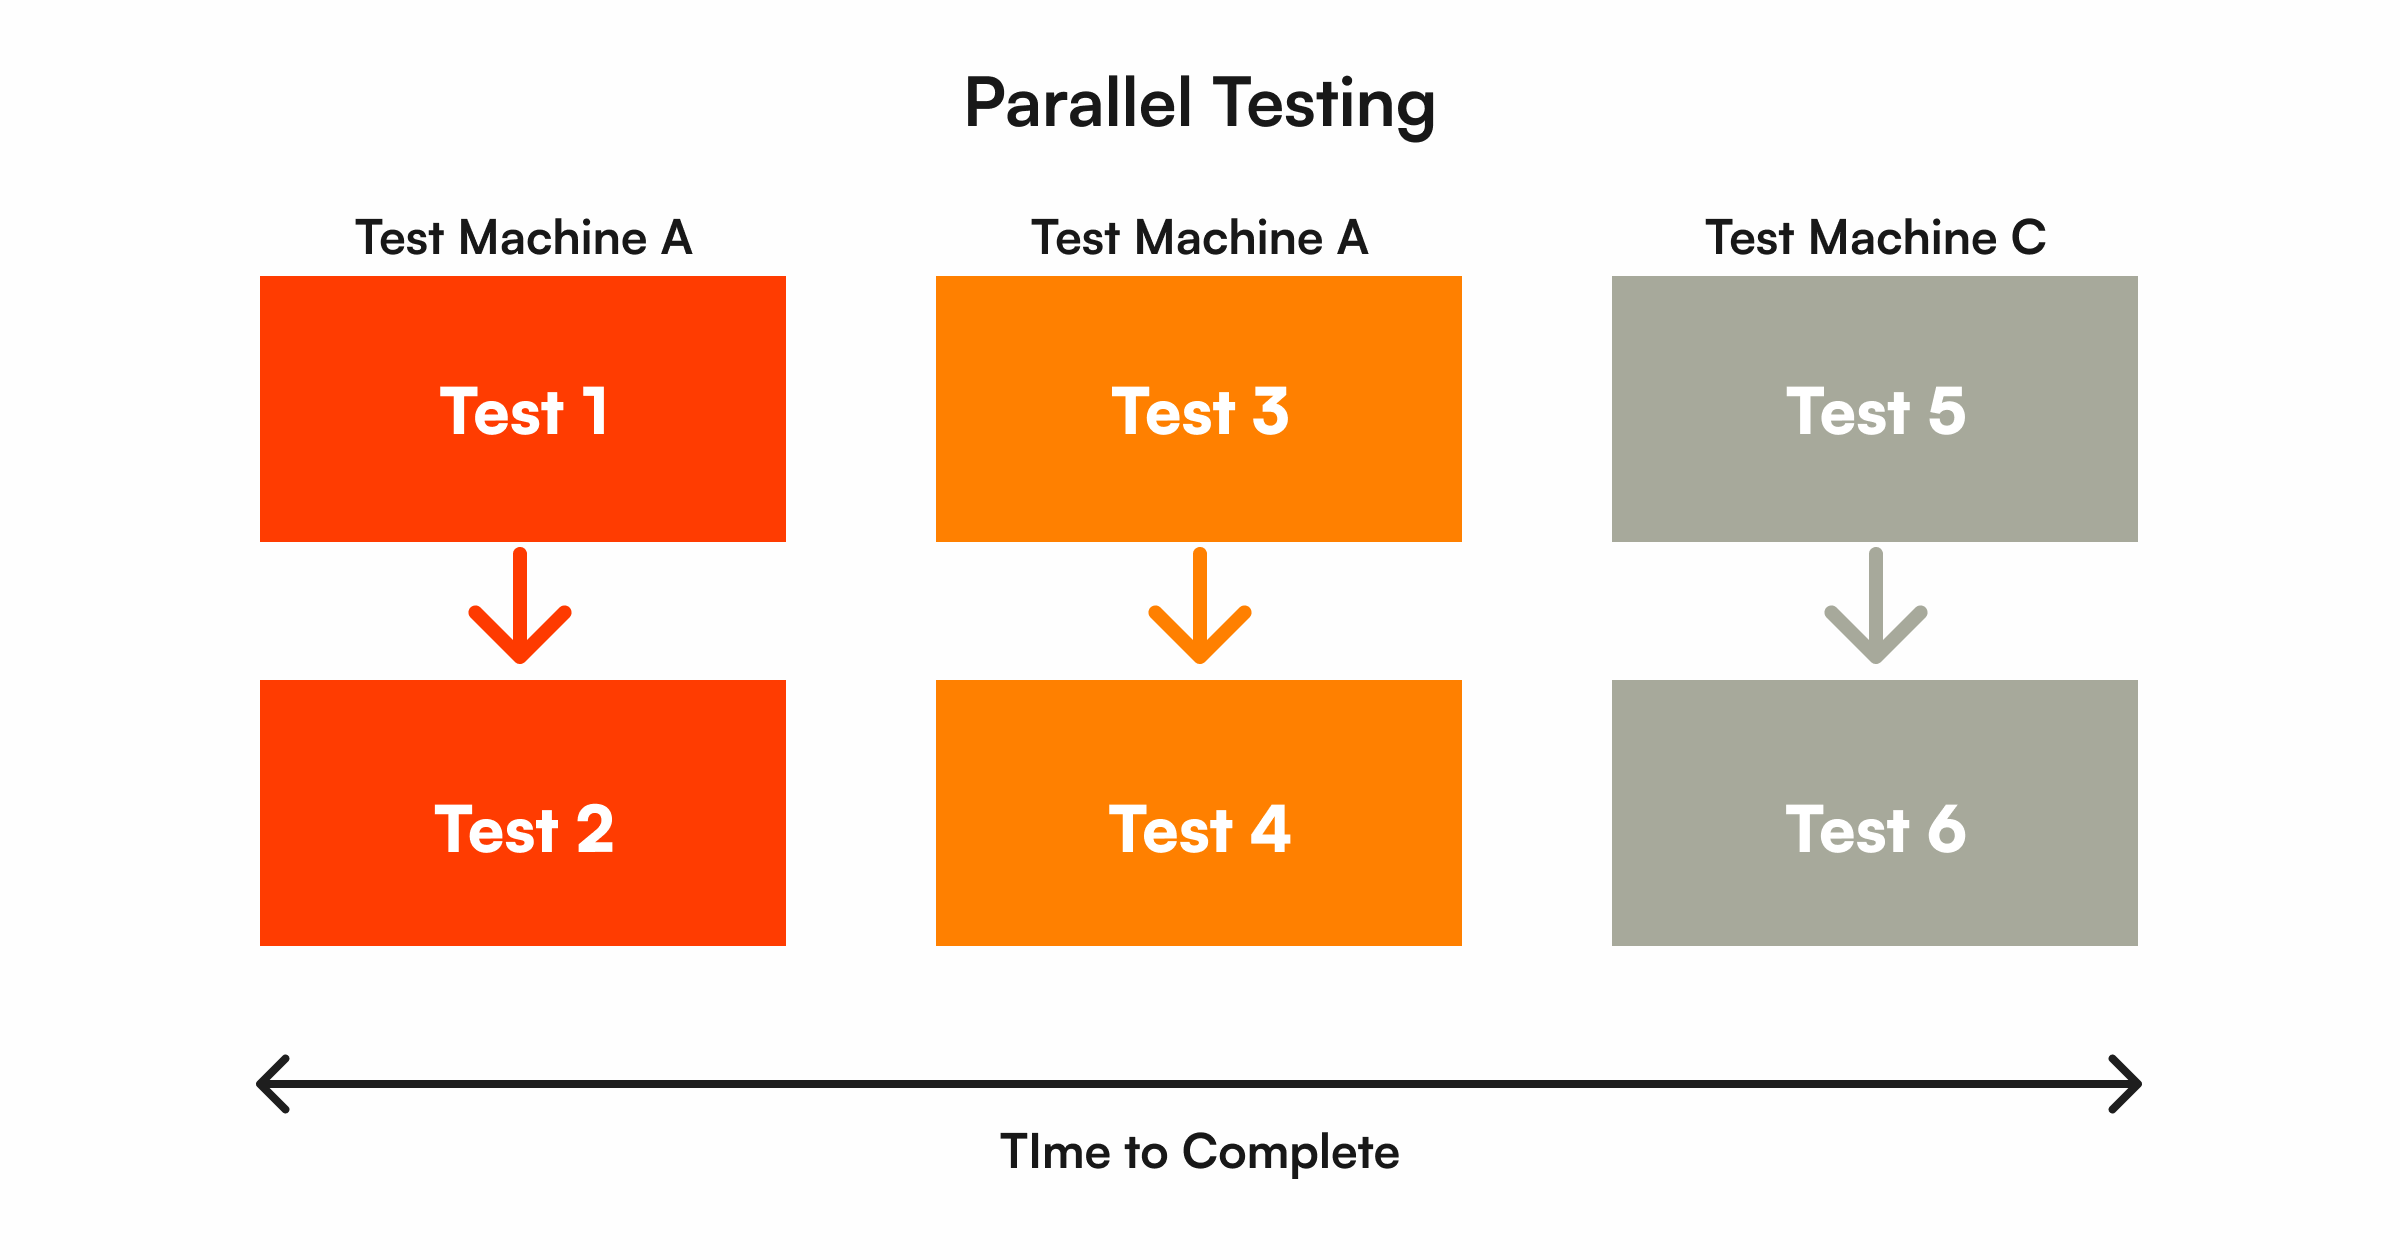 parallel testing